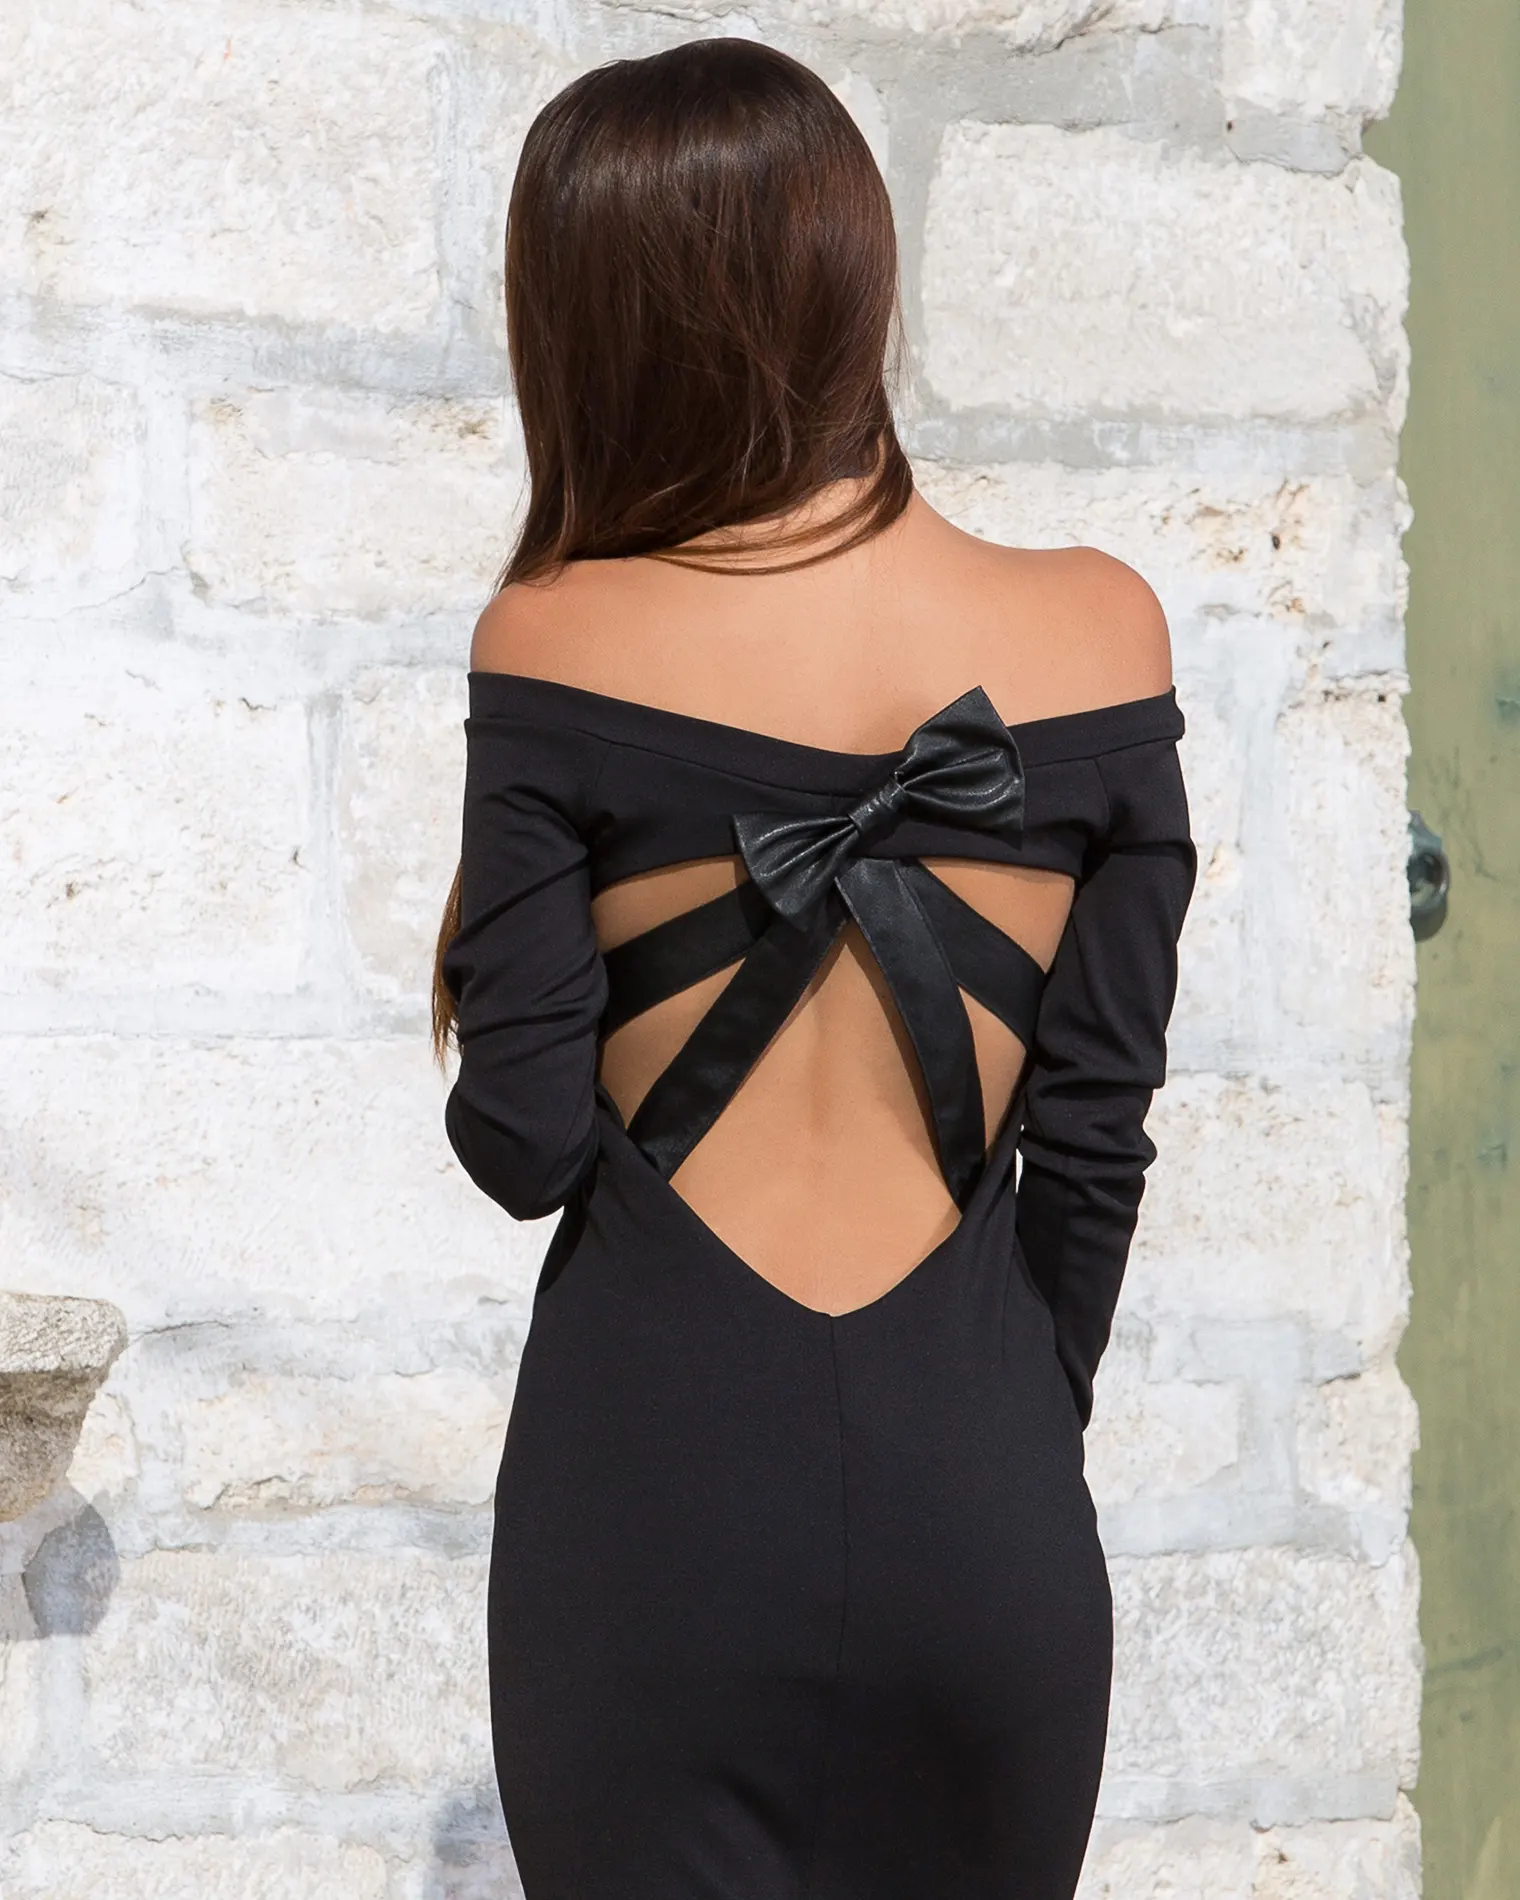 Charm Open back dress, Black Color